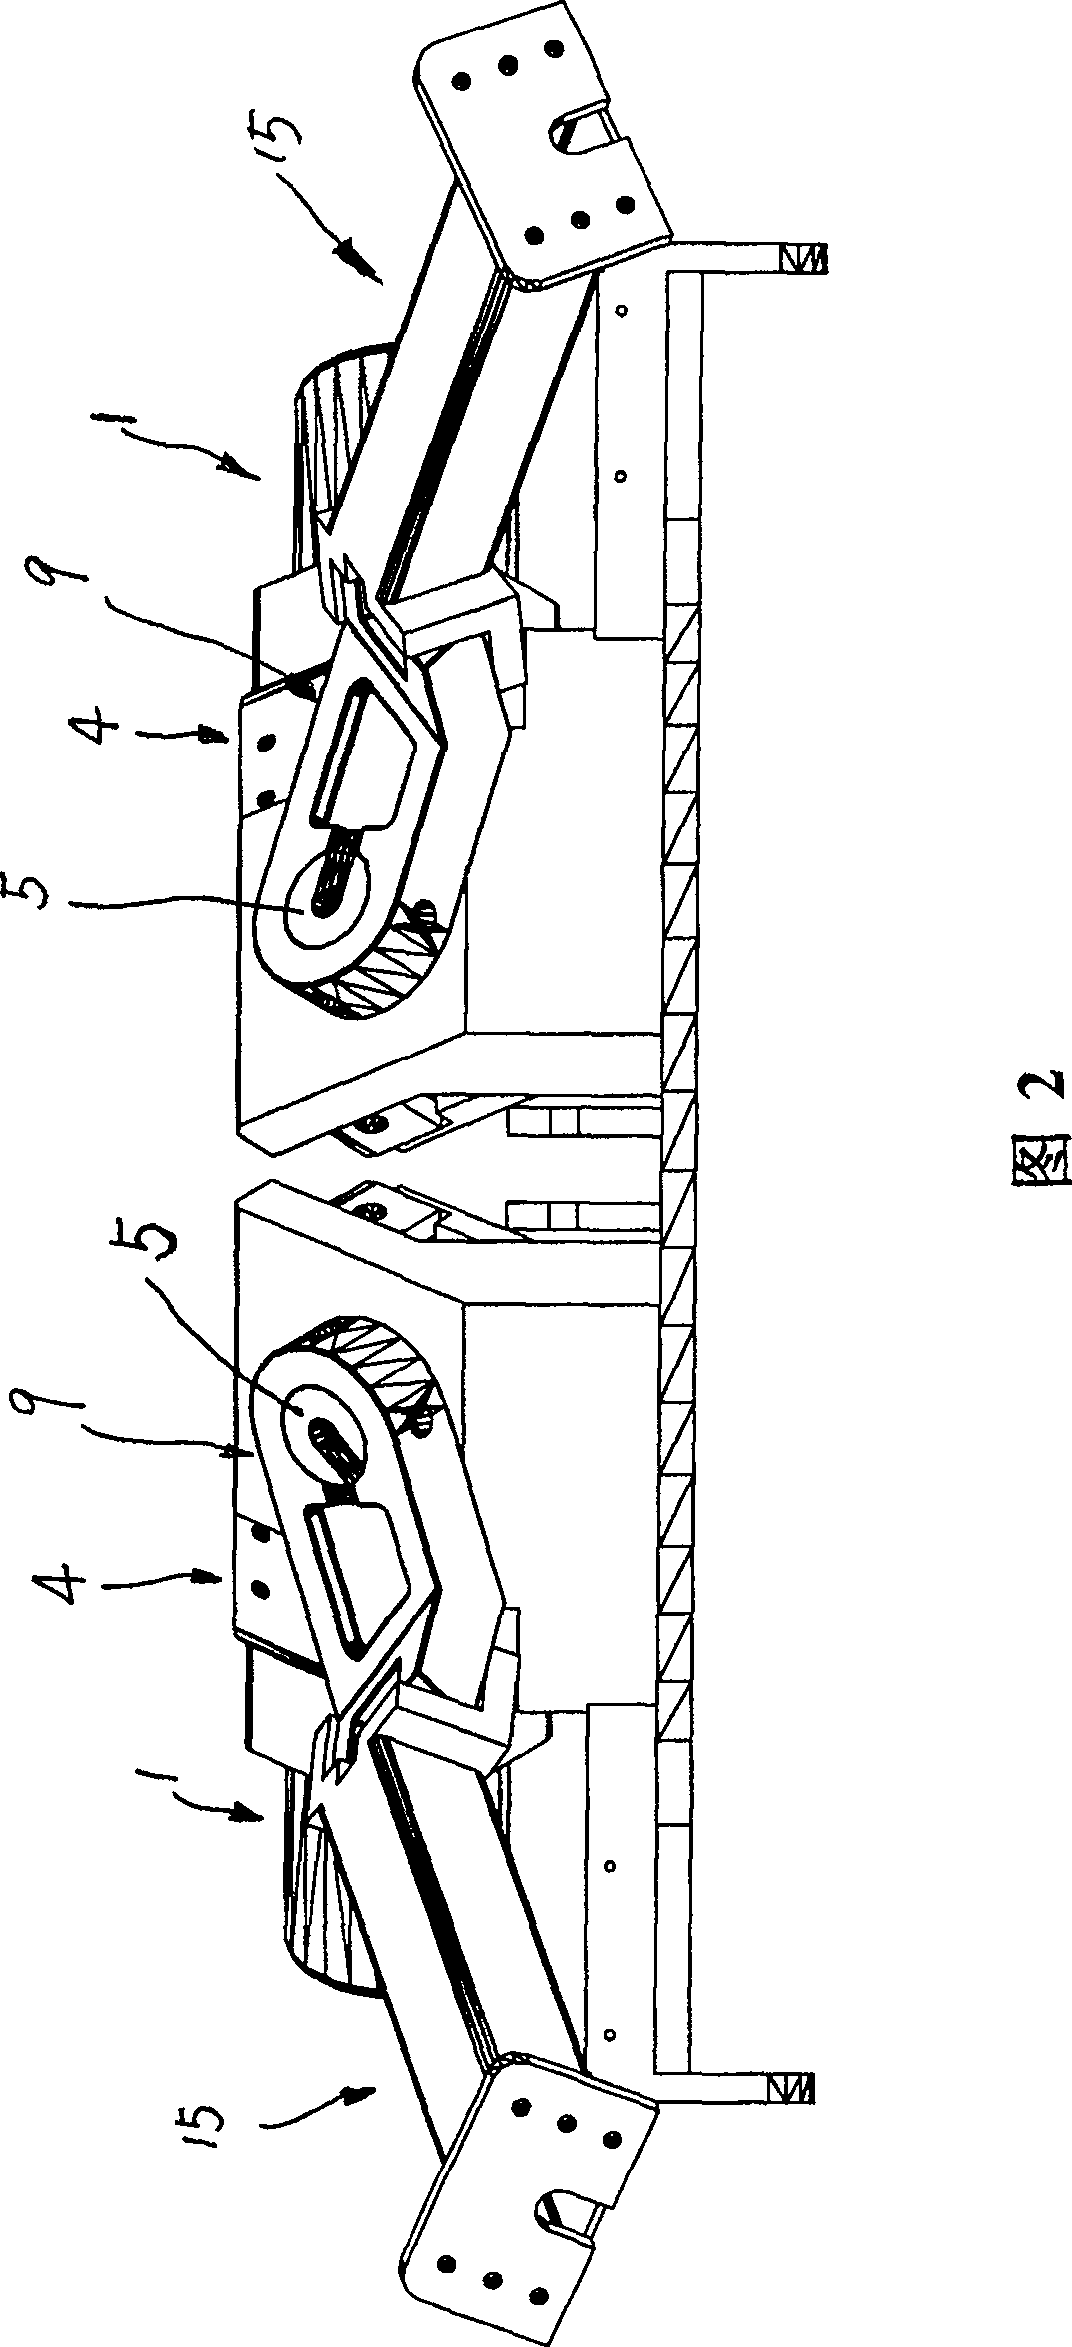 Electric leg-separating mechanism